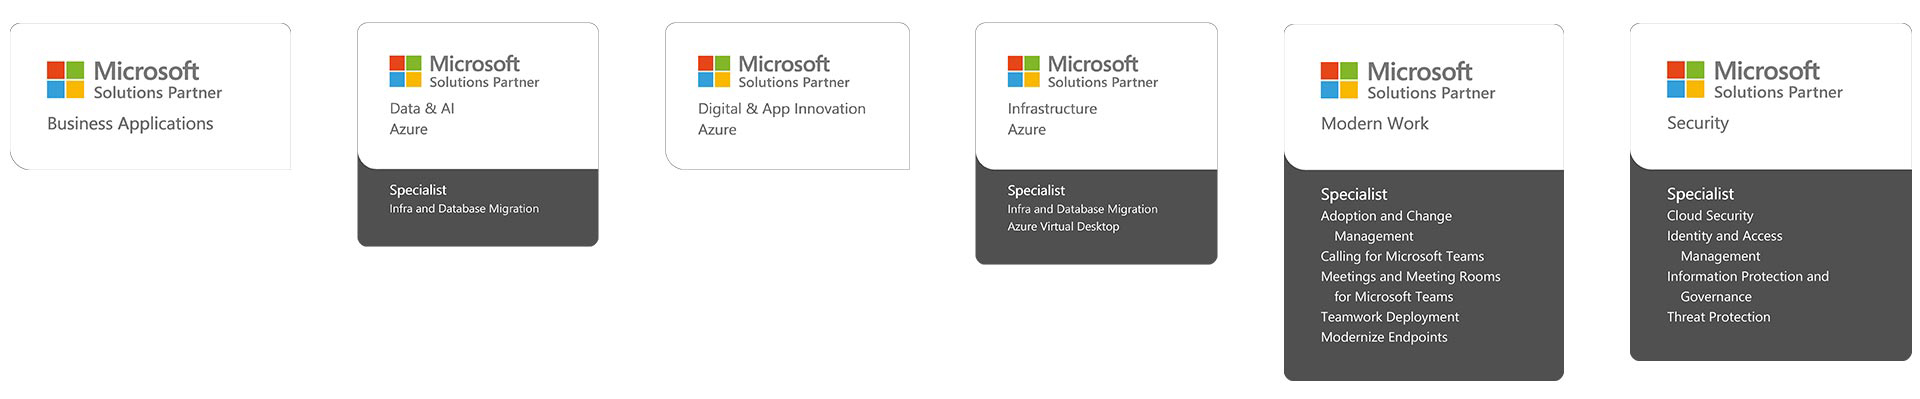 Microsoft Solution Partner Logos